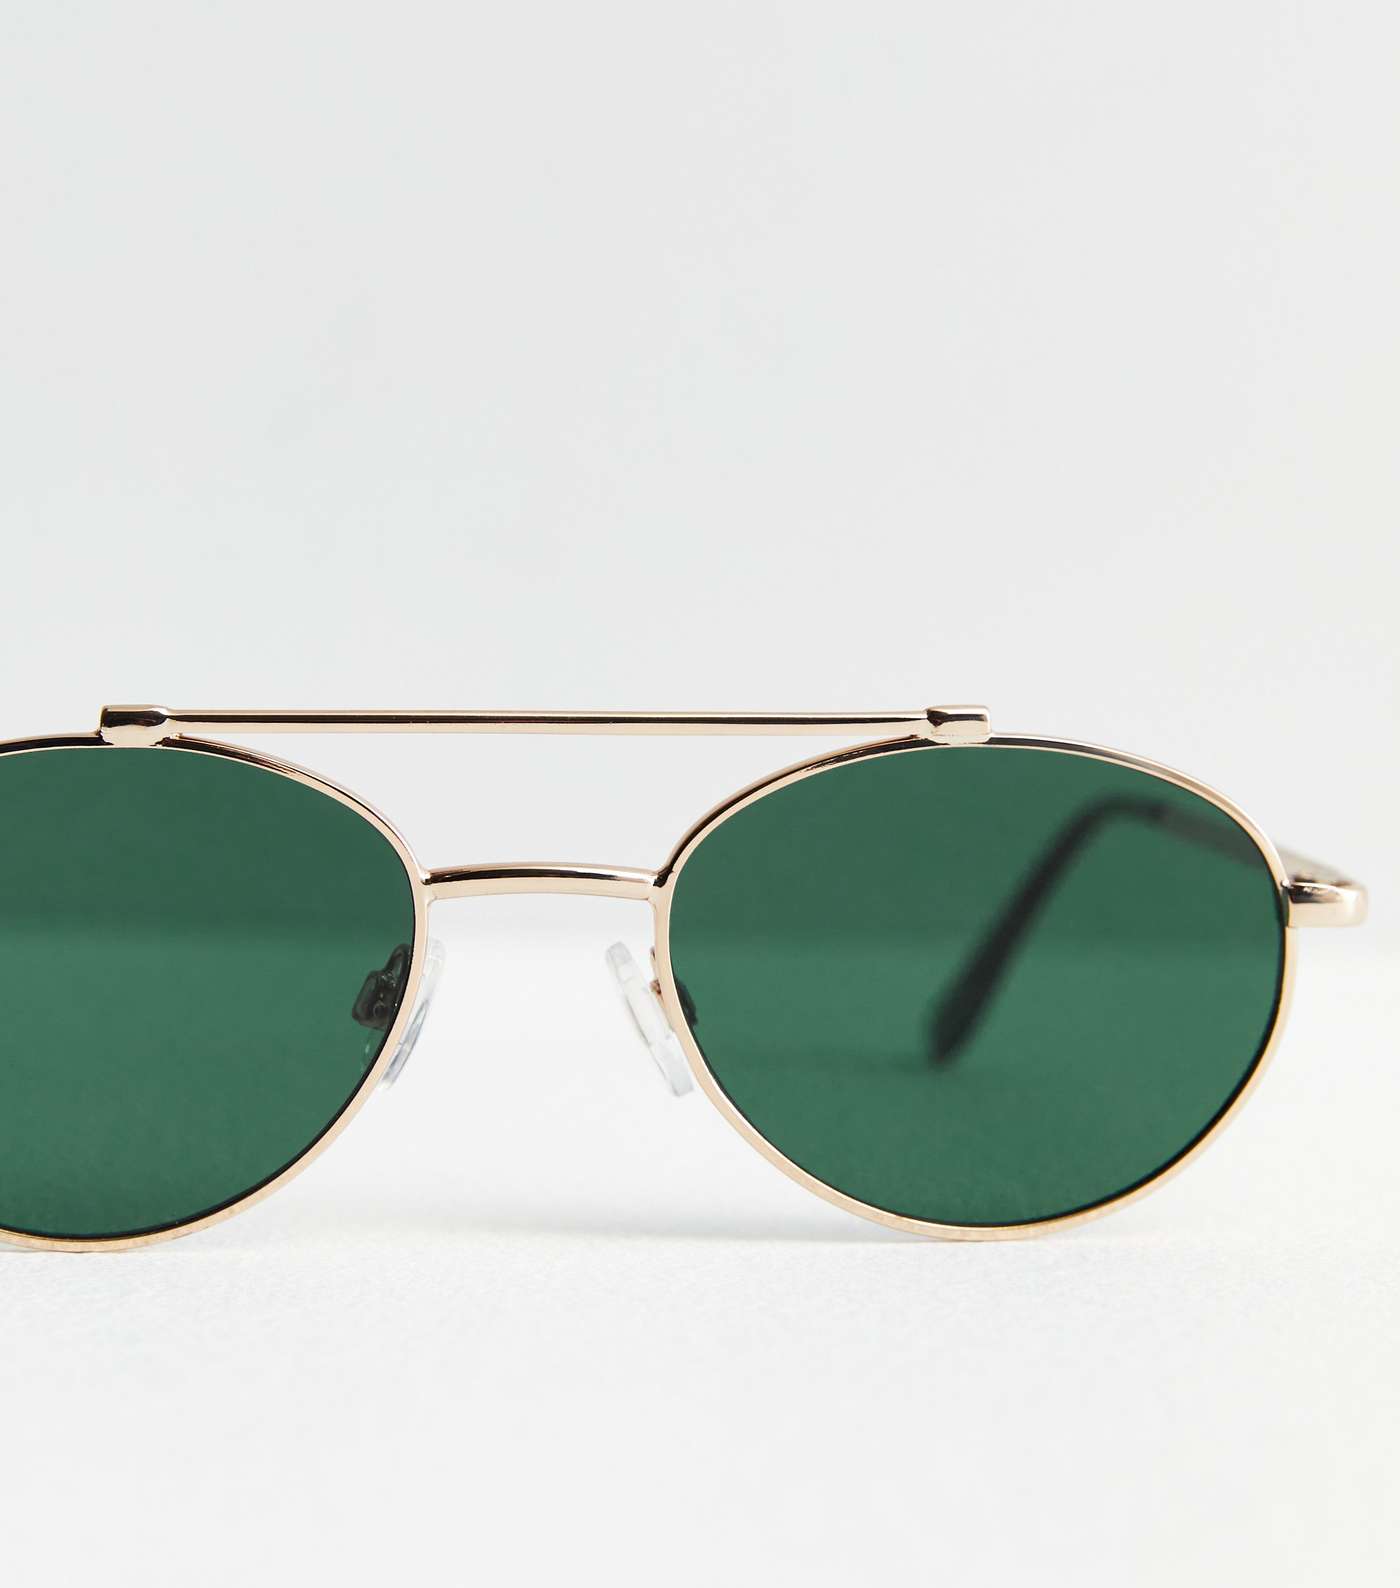 Gold Oval Frame Sunglasses Image 4